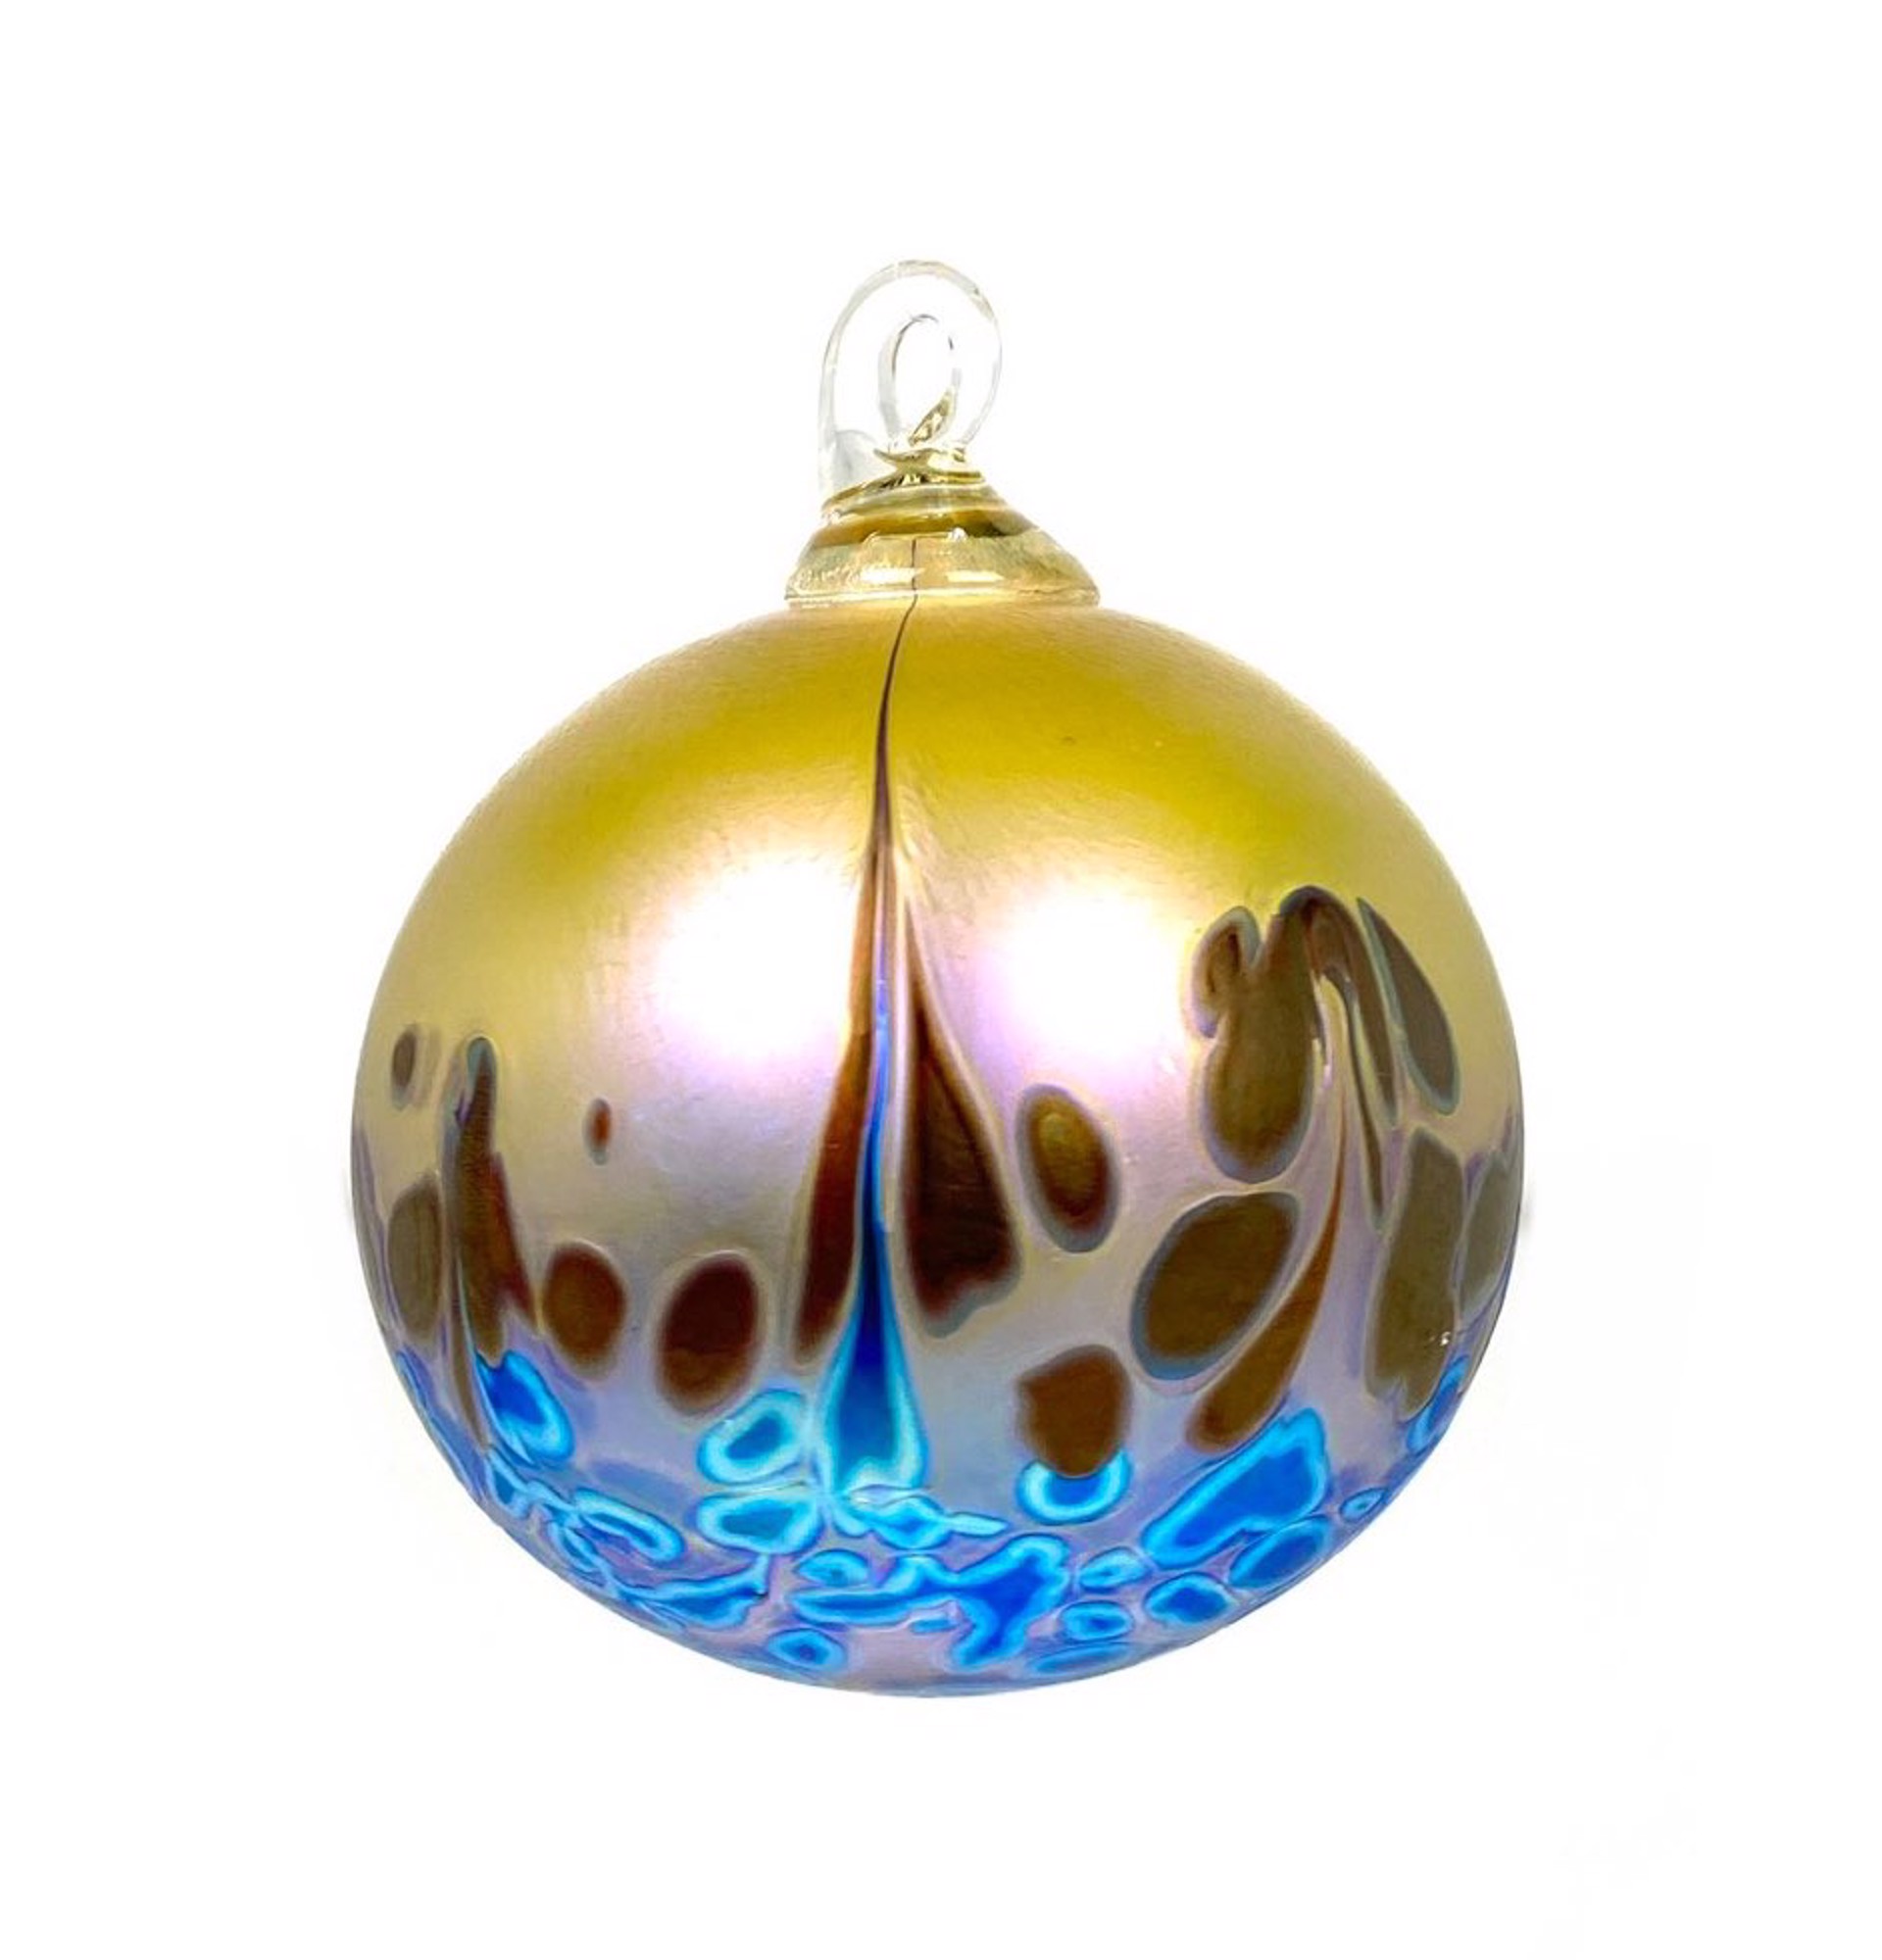 Artisan Carnival Ornament by Furnace Glass